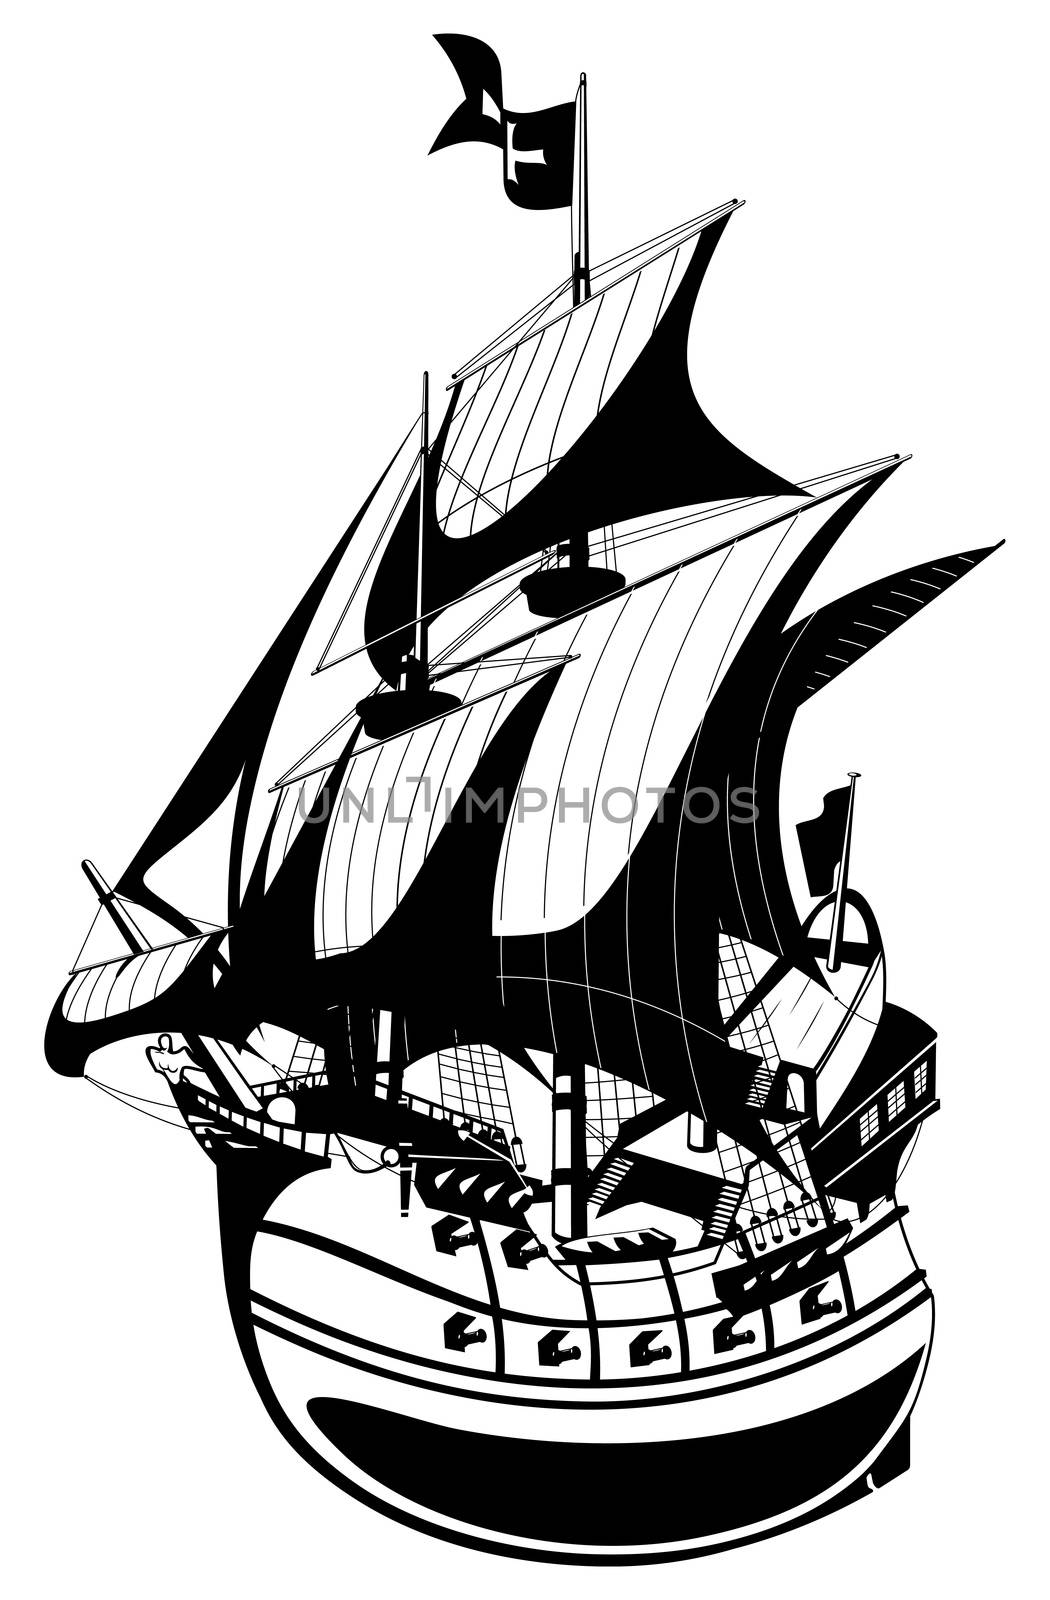 vector illustration of a medieval sailing ship.